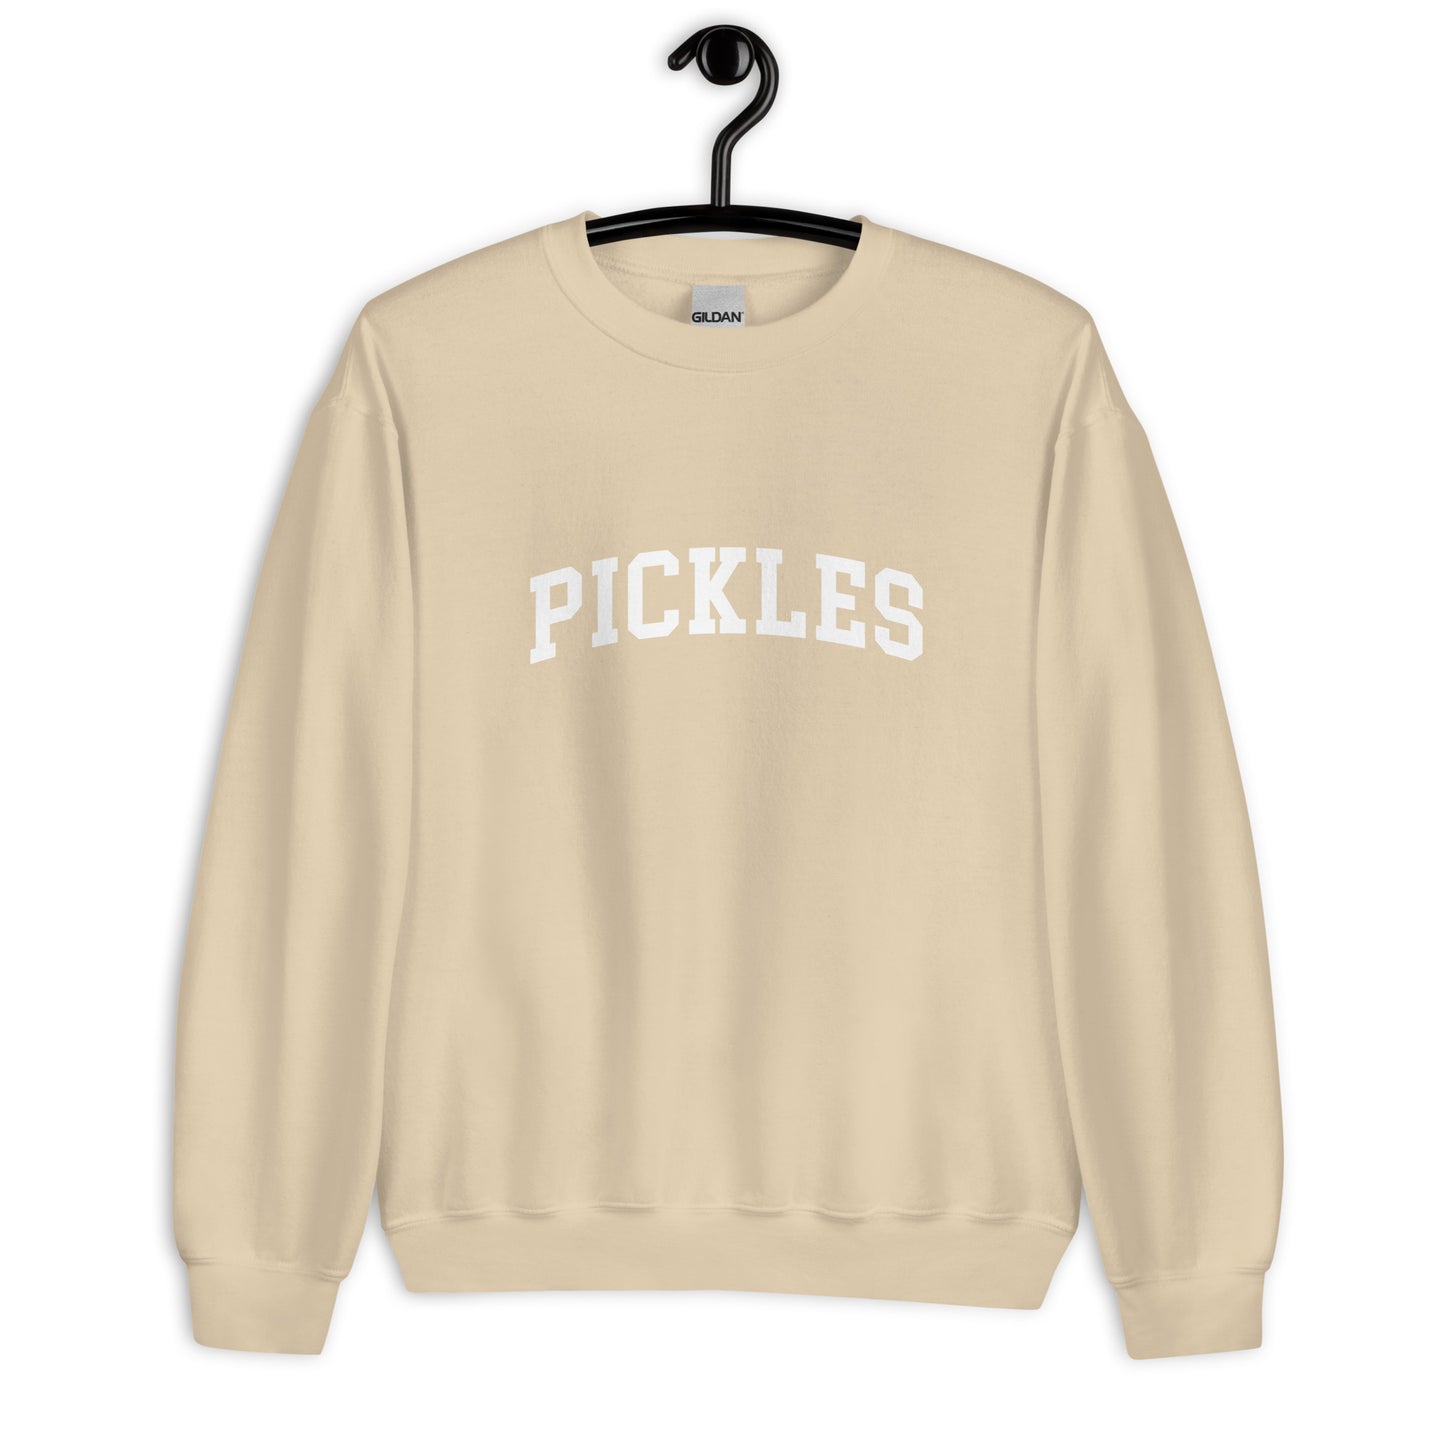 Pickles Sweatshirt - Arched Font